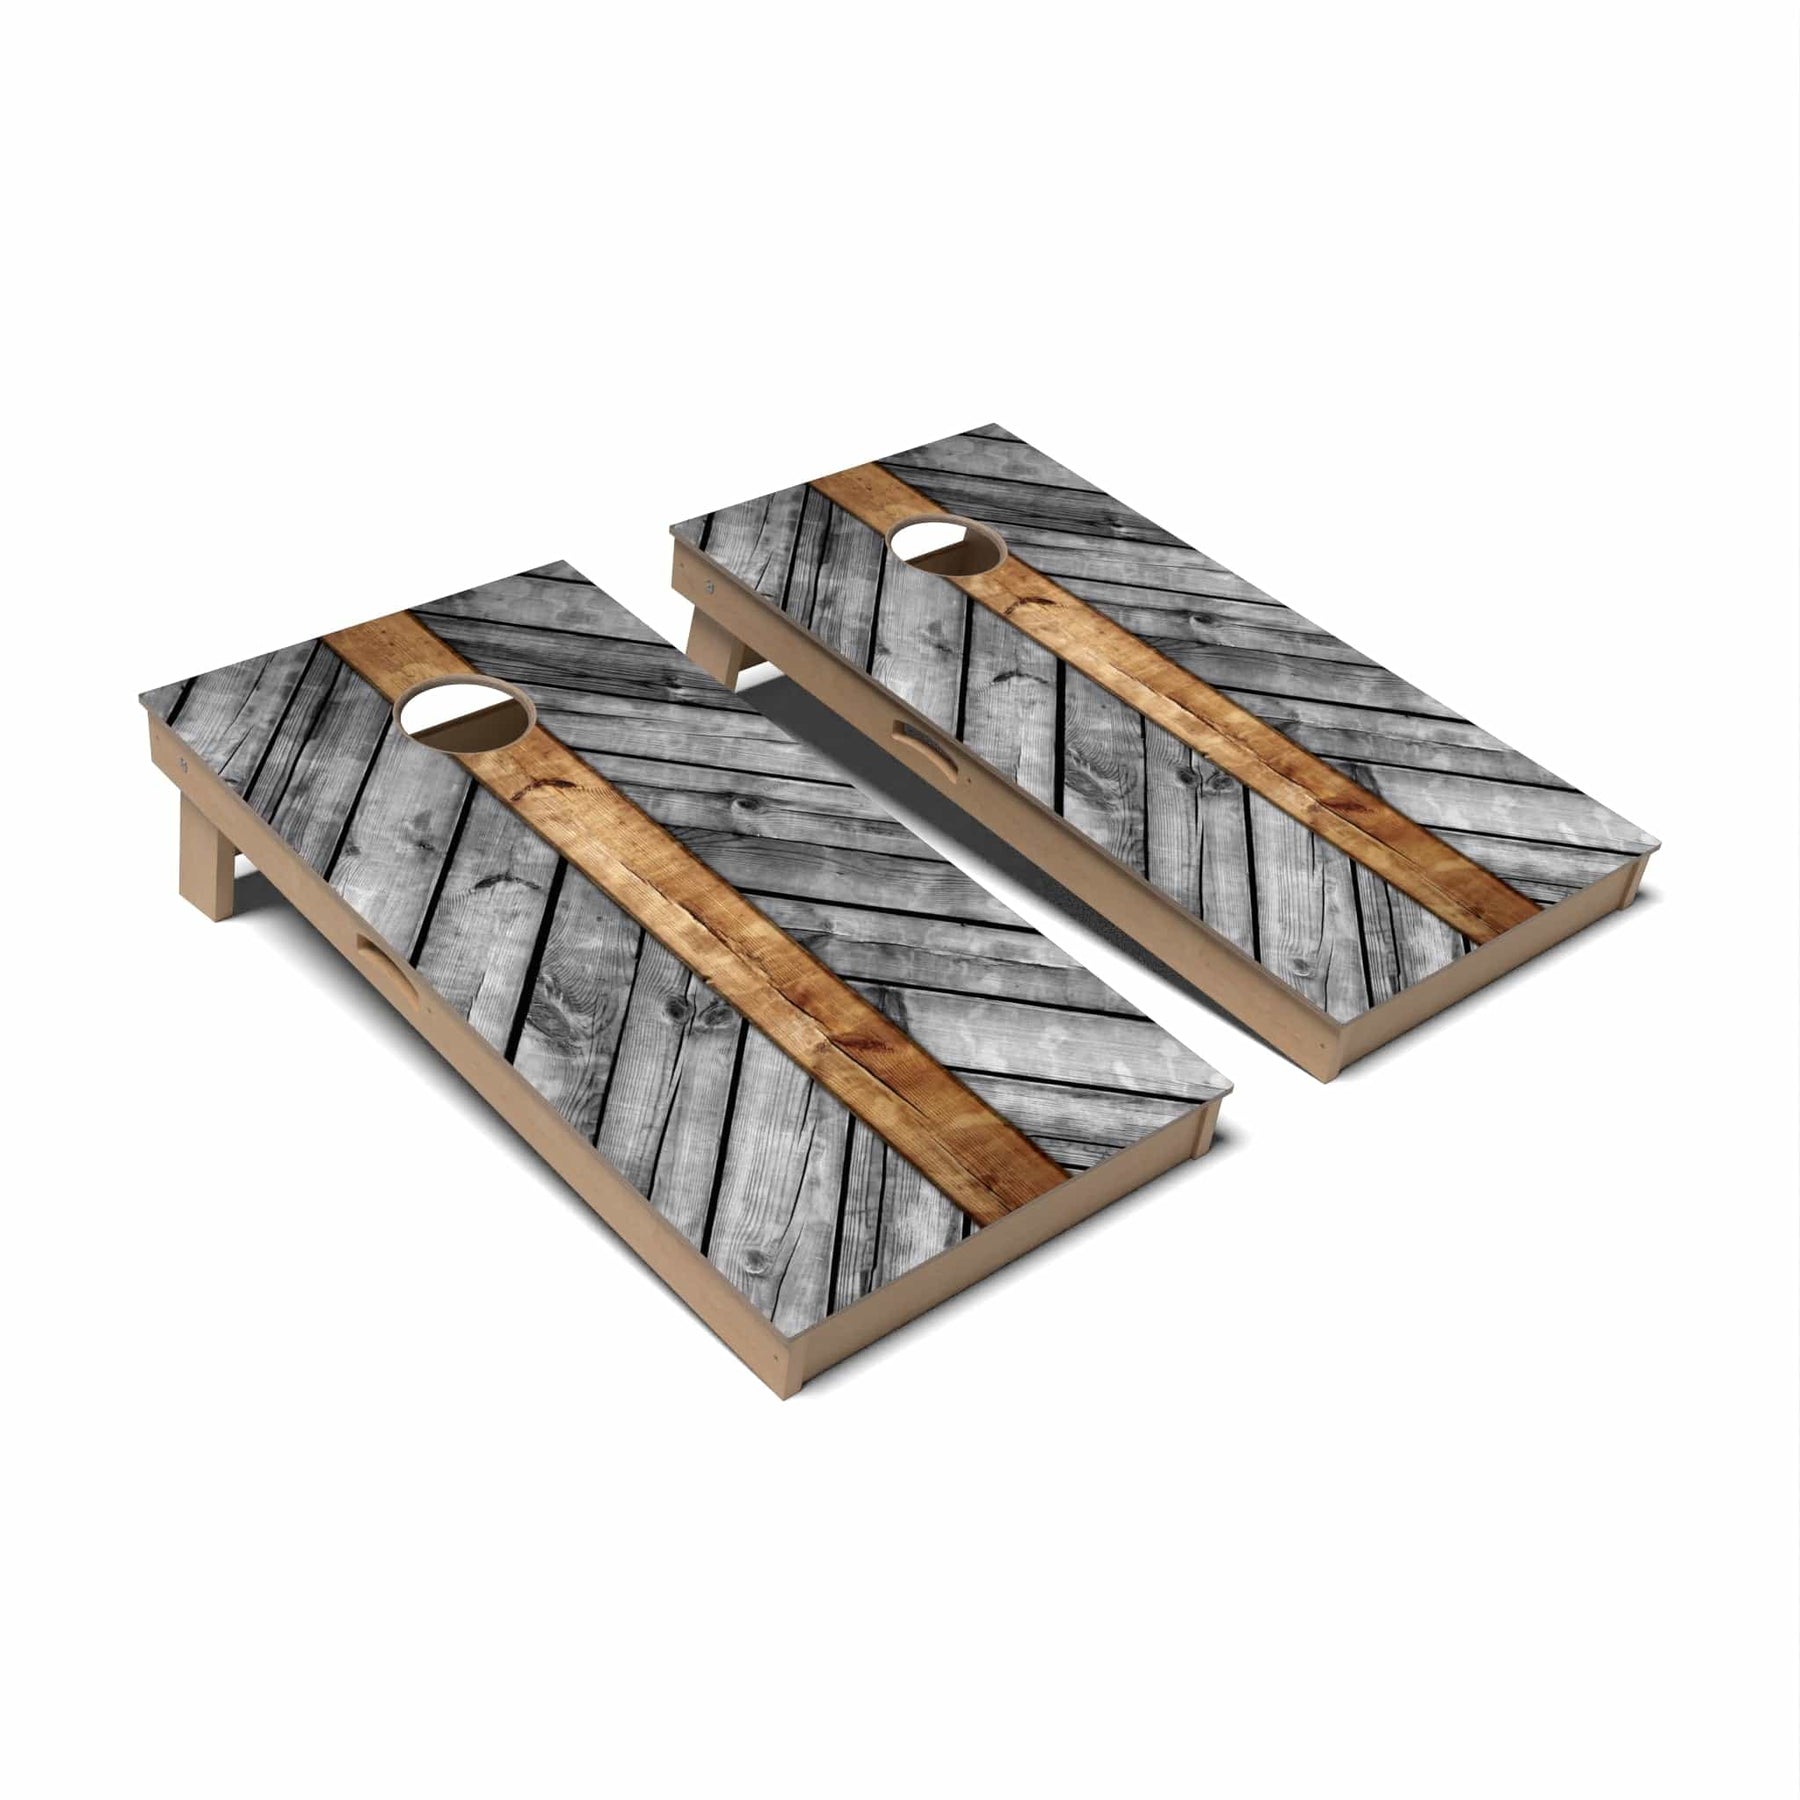 Geometric Wood Cornhole Boards - Professional Signature – Slick Woody's